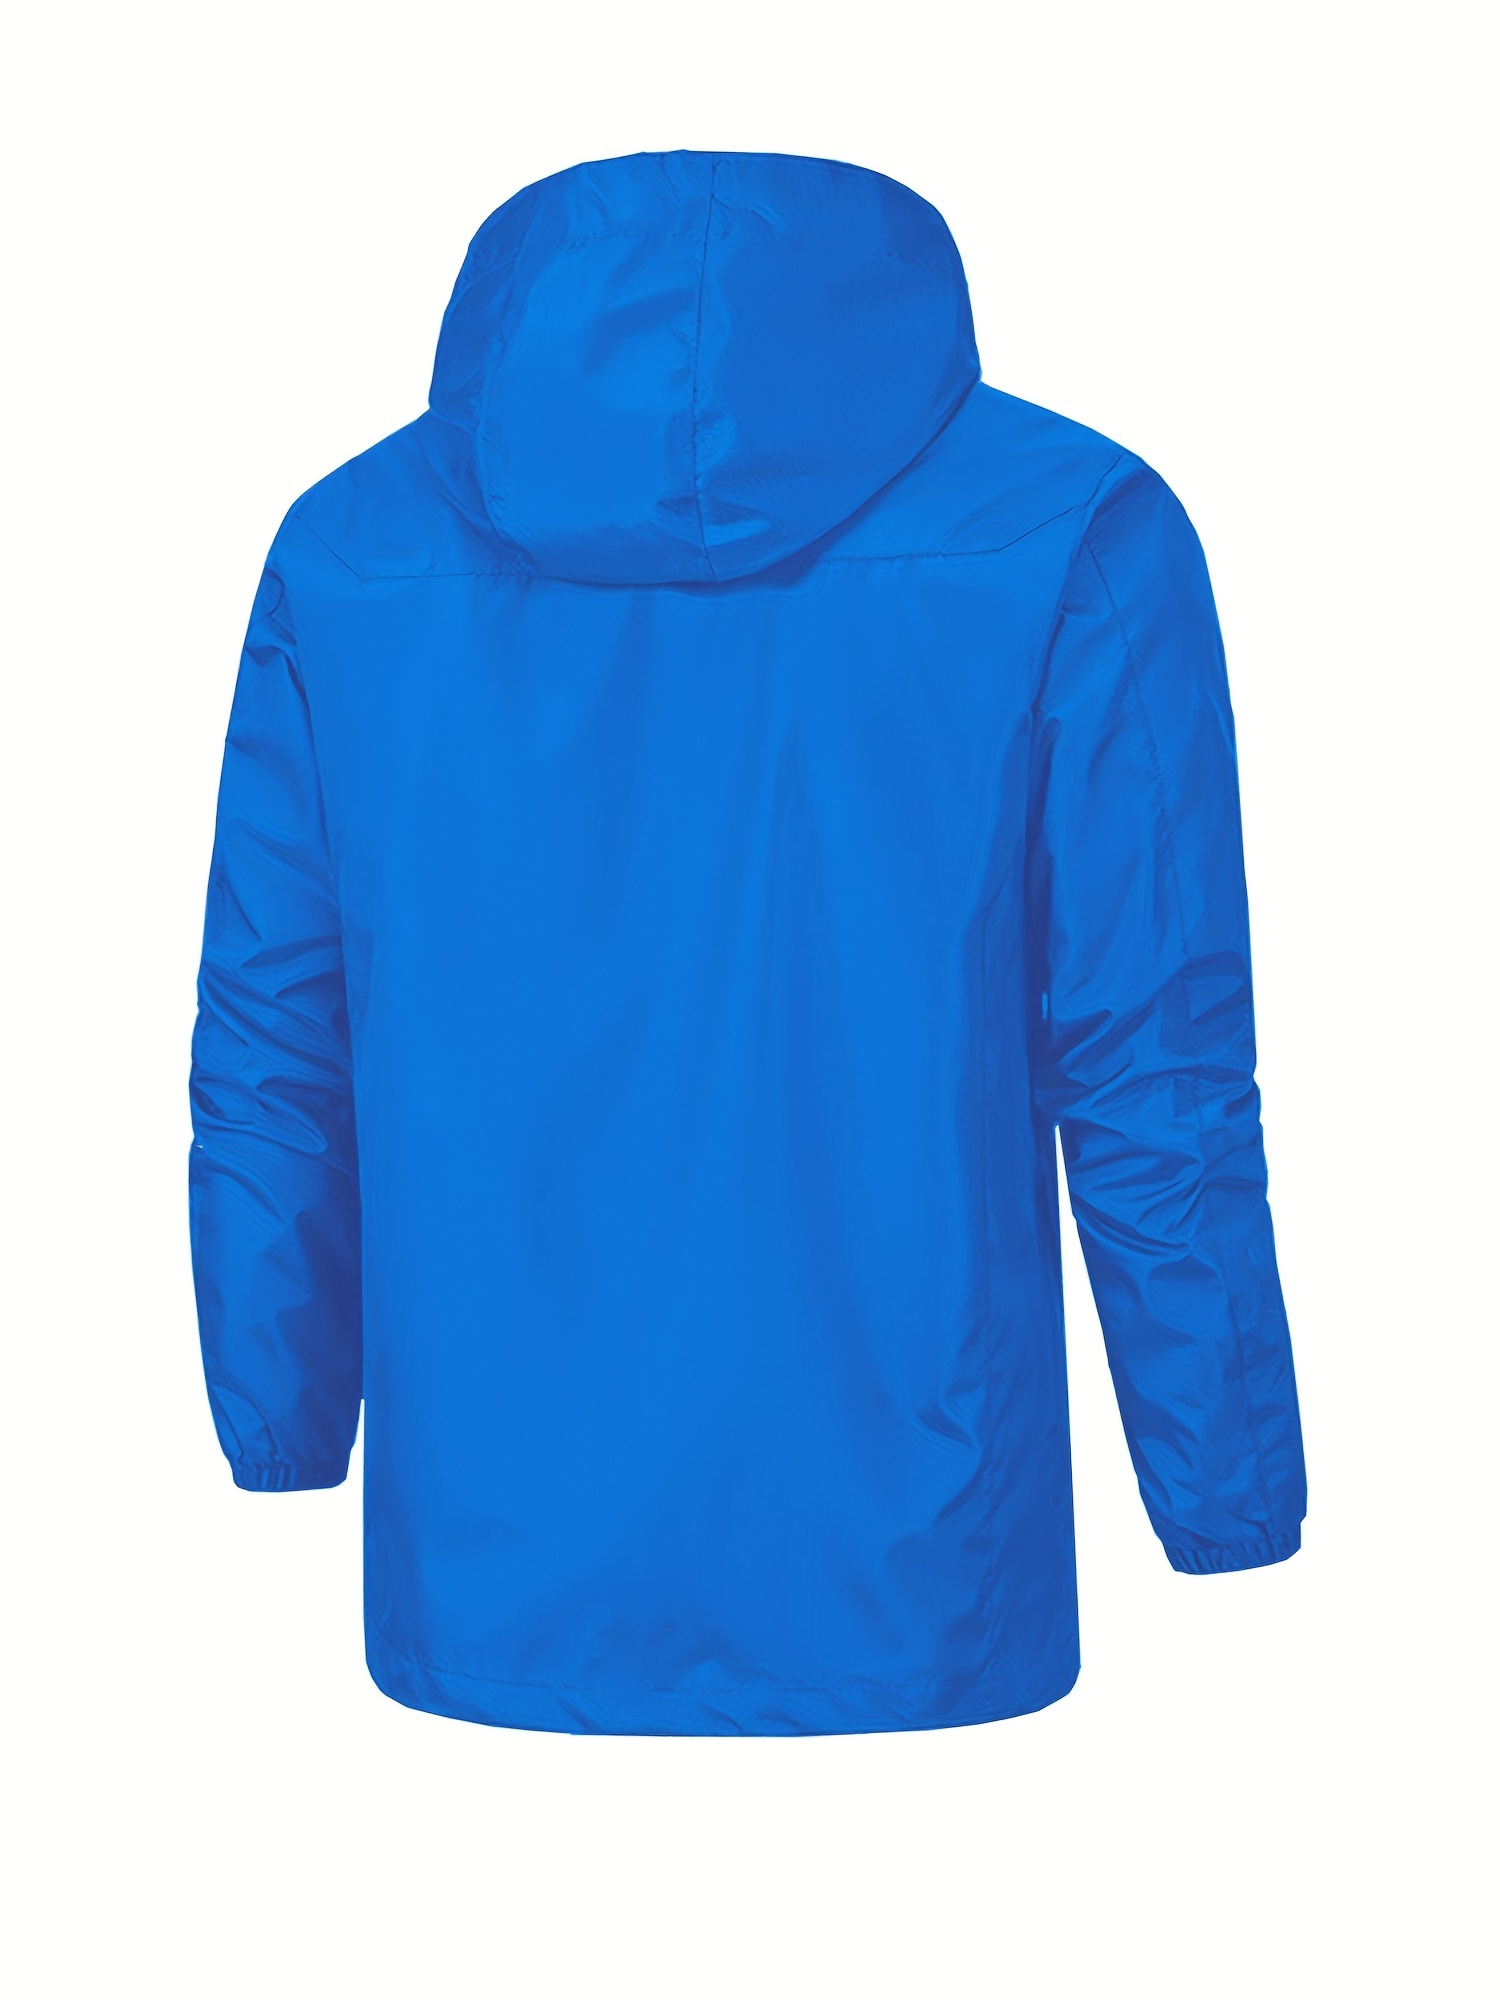 zip-up hooded windbreaker jacket